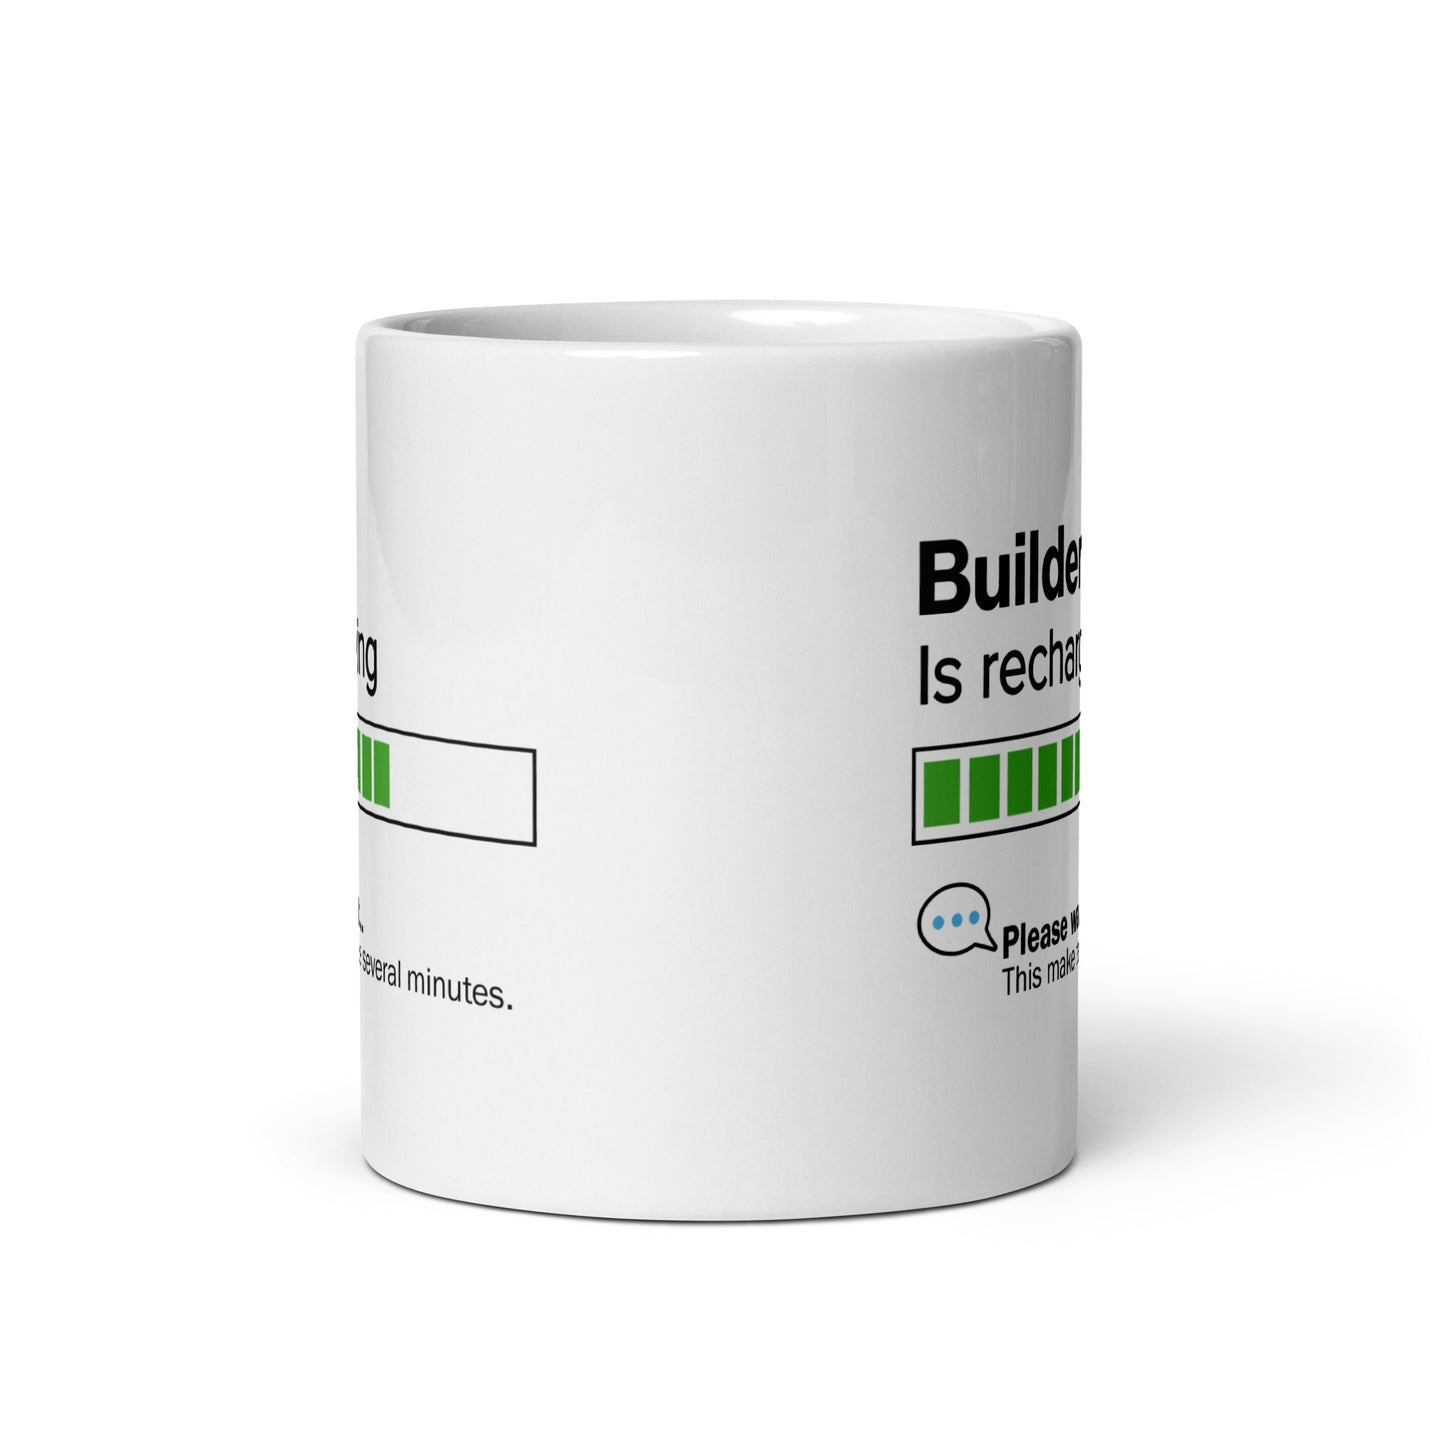 Builder Is Recharging Mug - 11oz - Perfect Gift for Builders